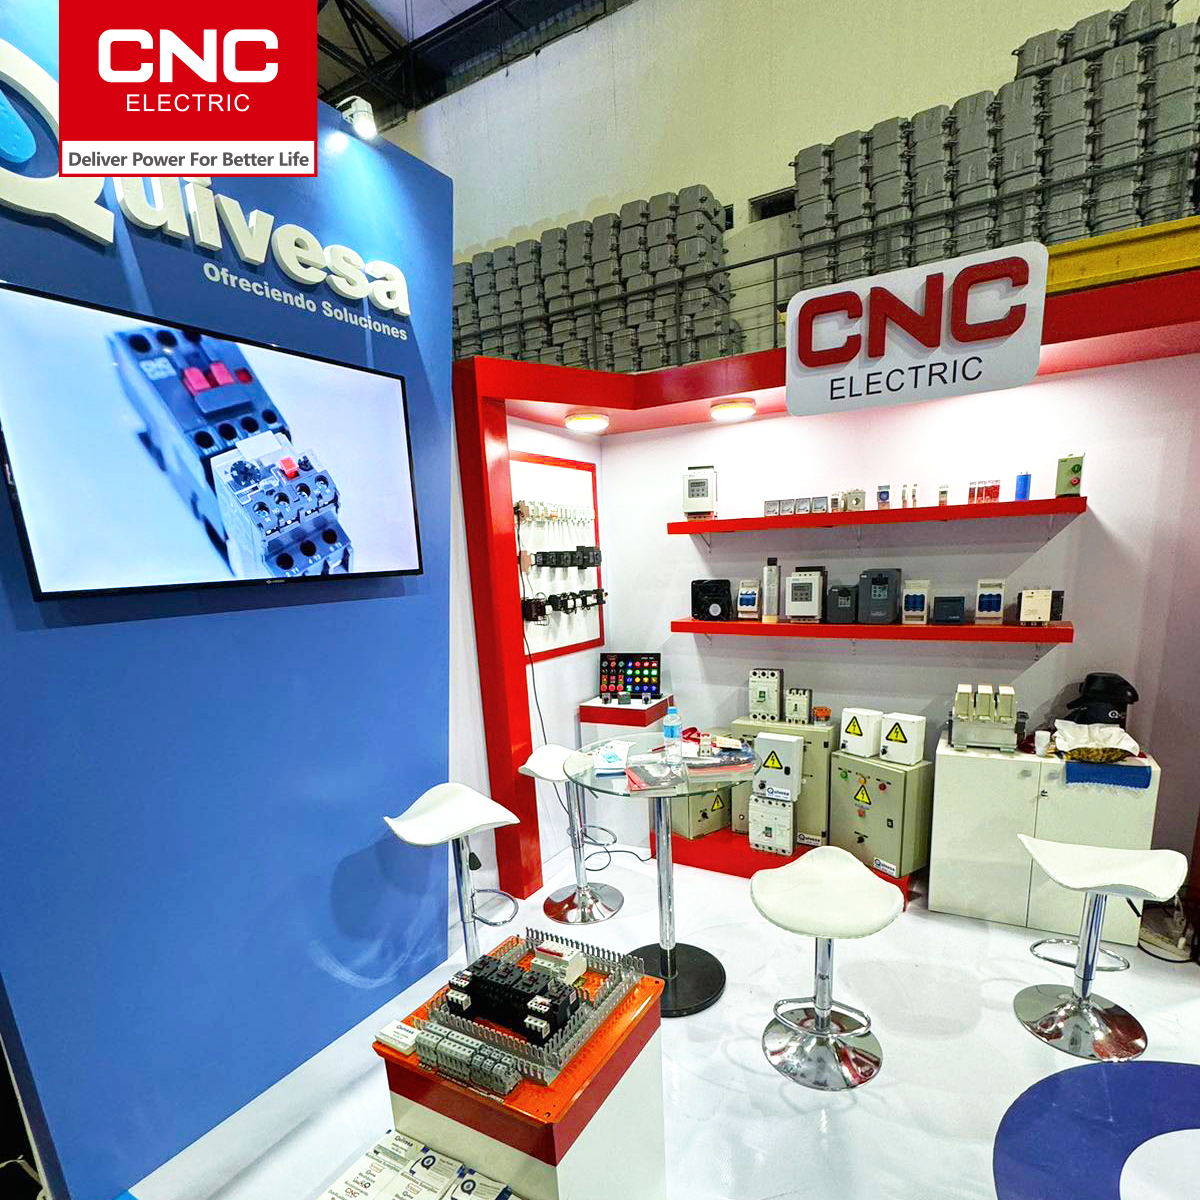 CNC |CNC Electric na razstavi v Paragvaju